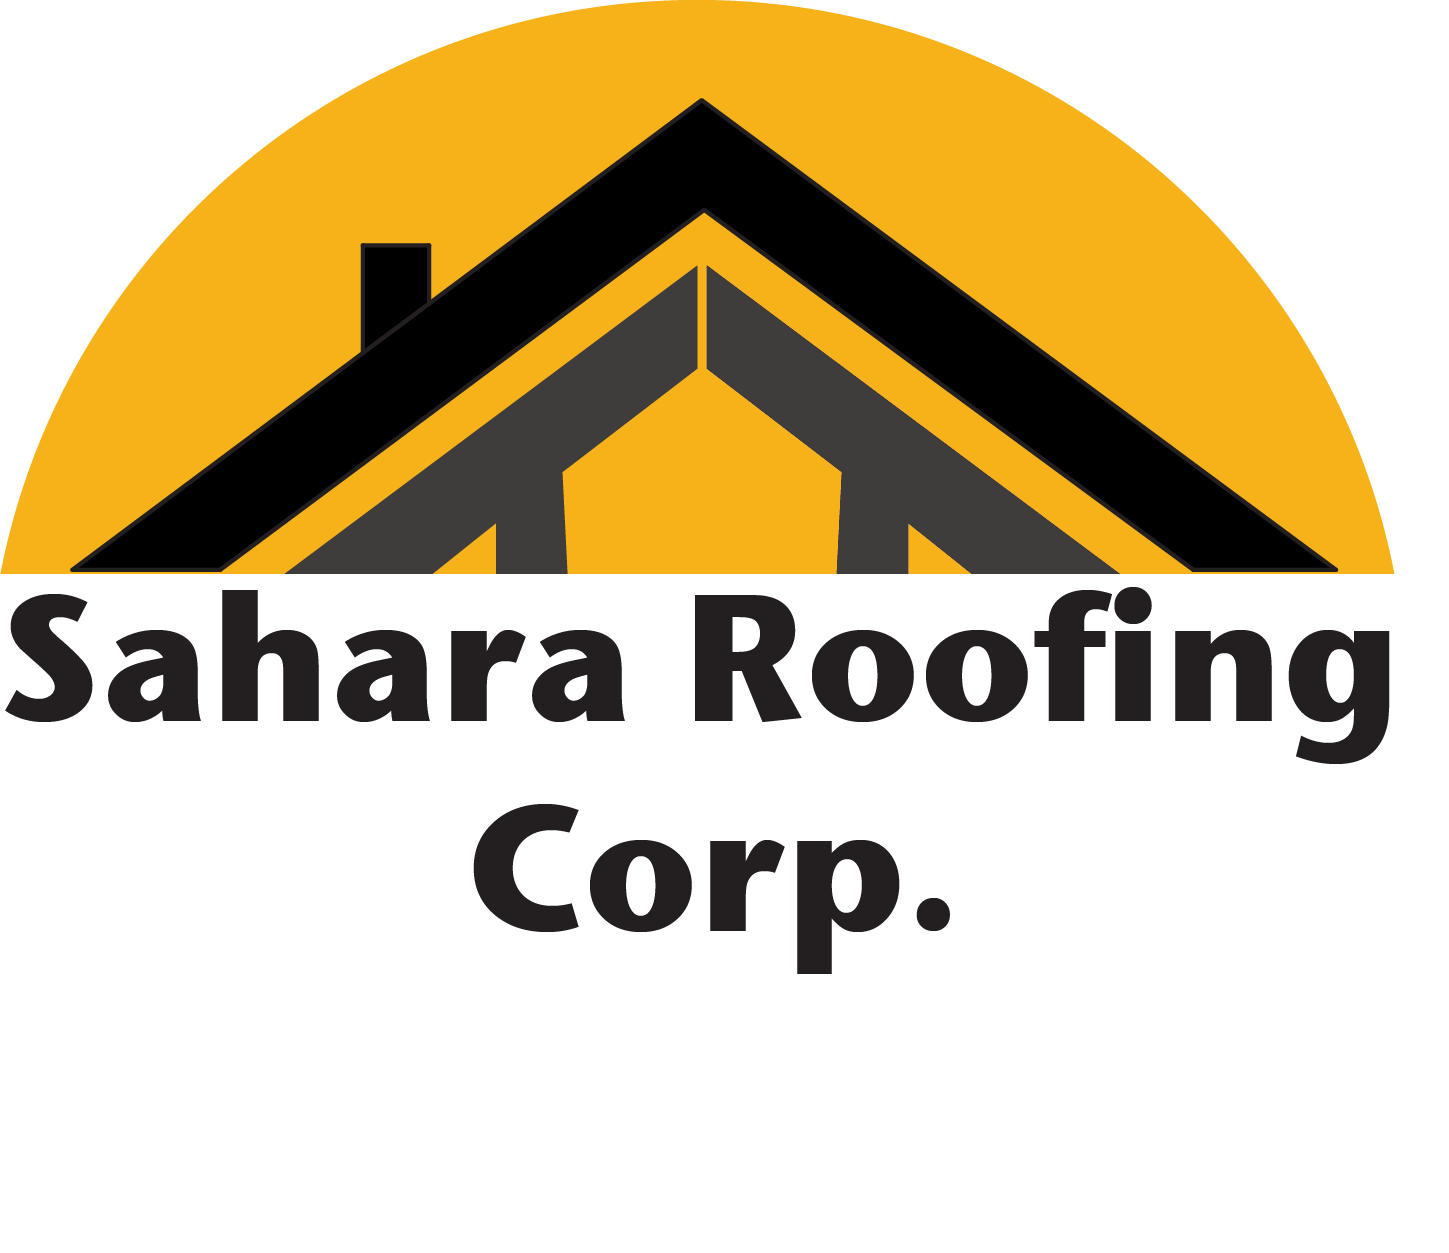 Sahara Roofing Corp